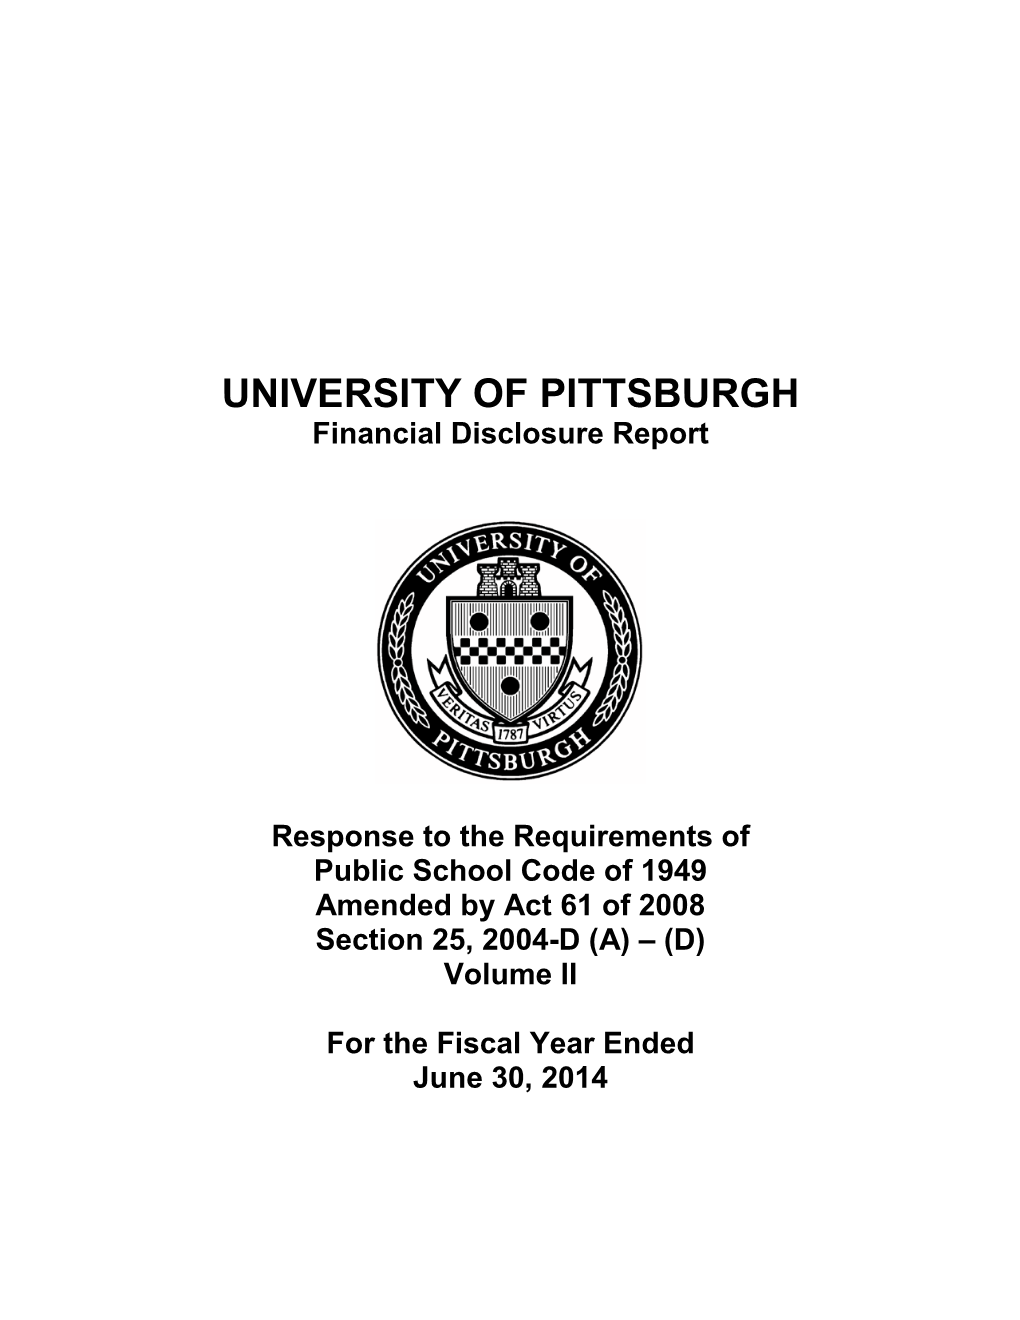 University of Pittsburgh 2013-2014 Financial Report Volume II